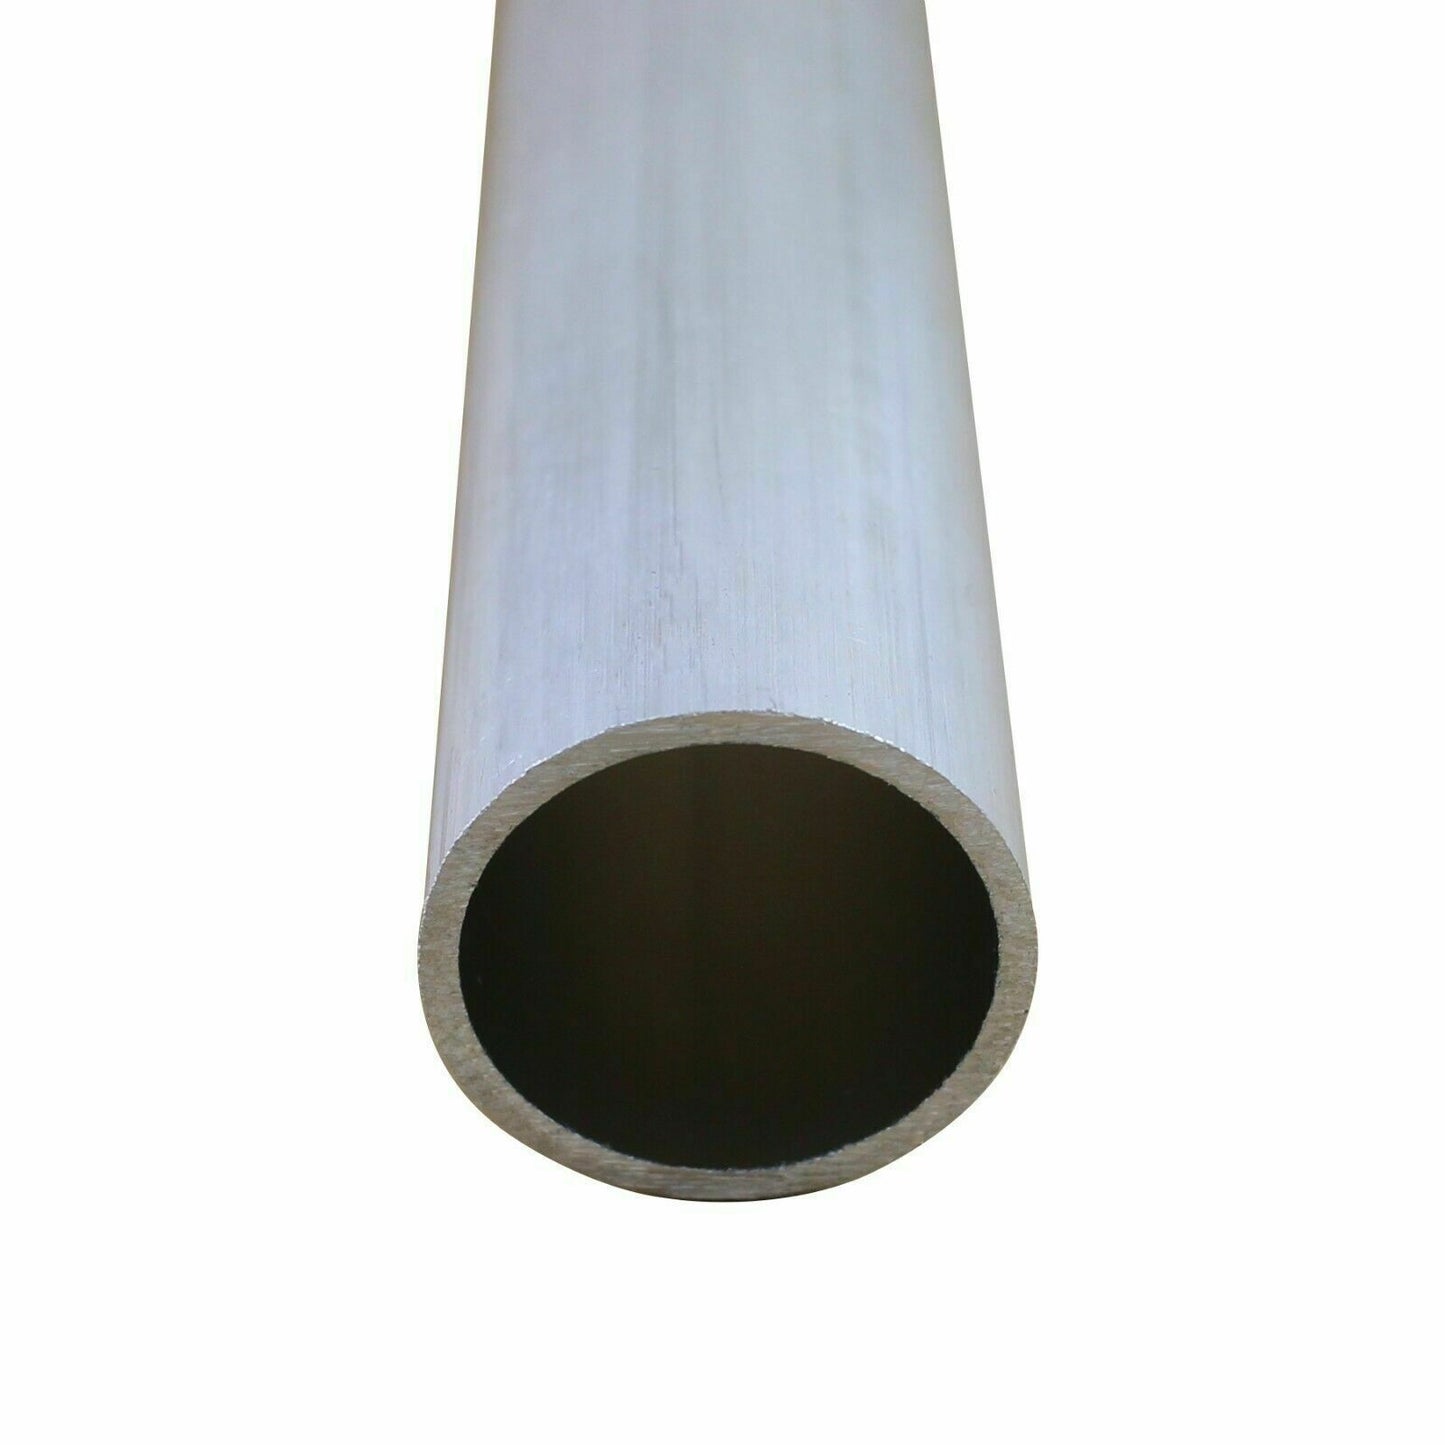 OD 12 mm ID 6 mm 1 pièce Tube rond en aluminium